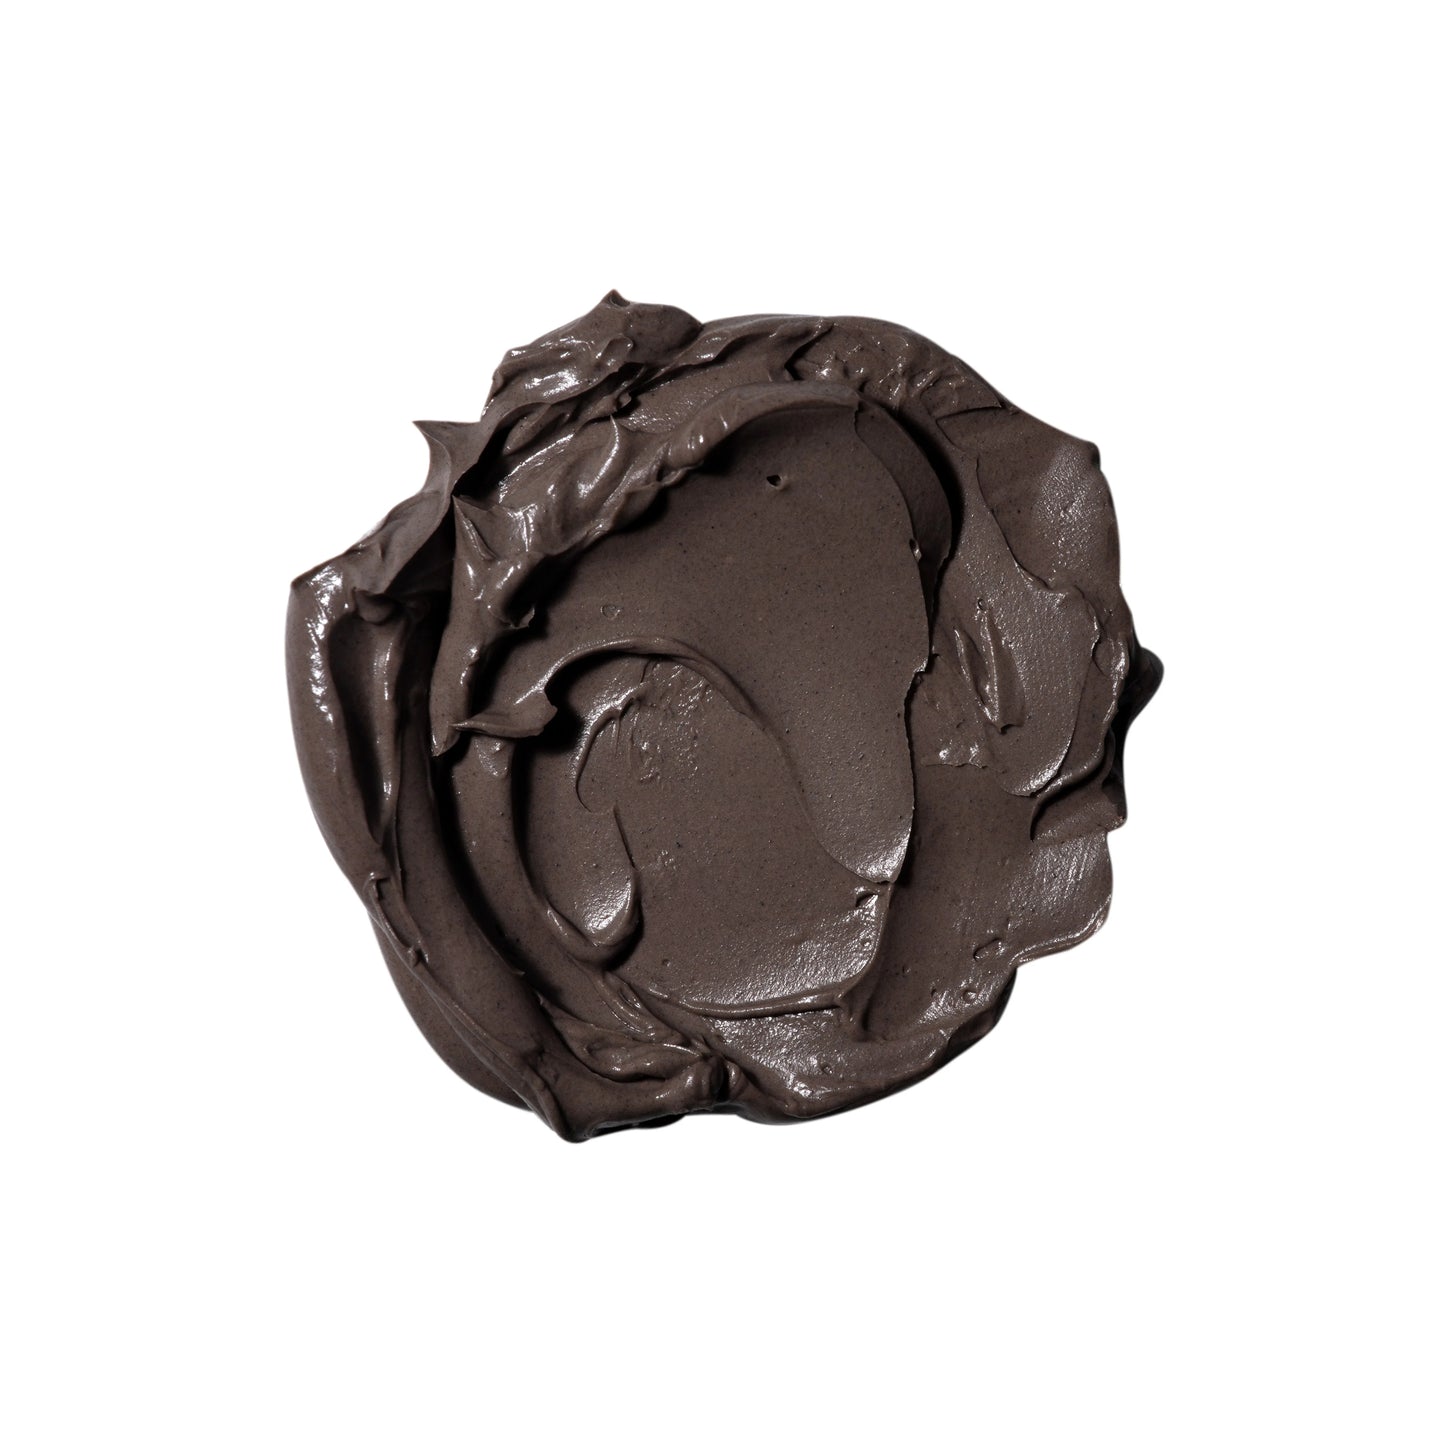 Freeman Beauty Exotic Blends Revitalizing Dutch Cacao Cream Mask